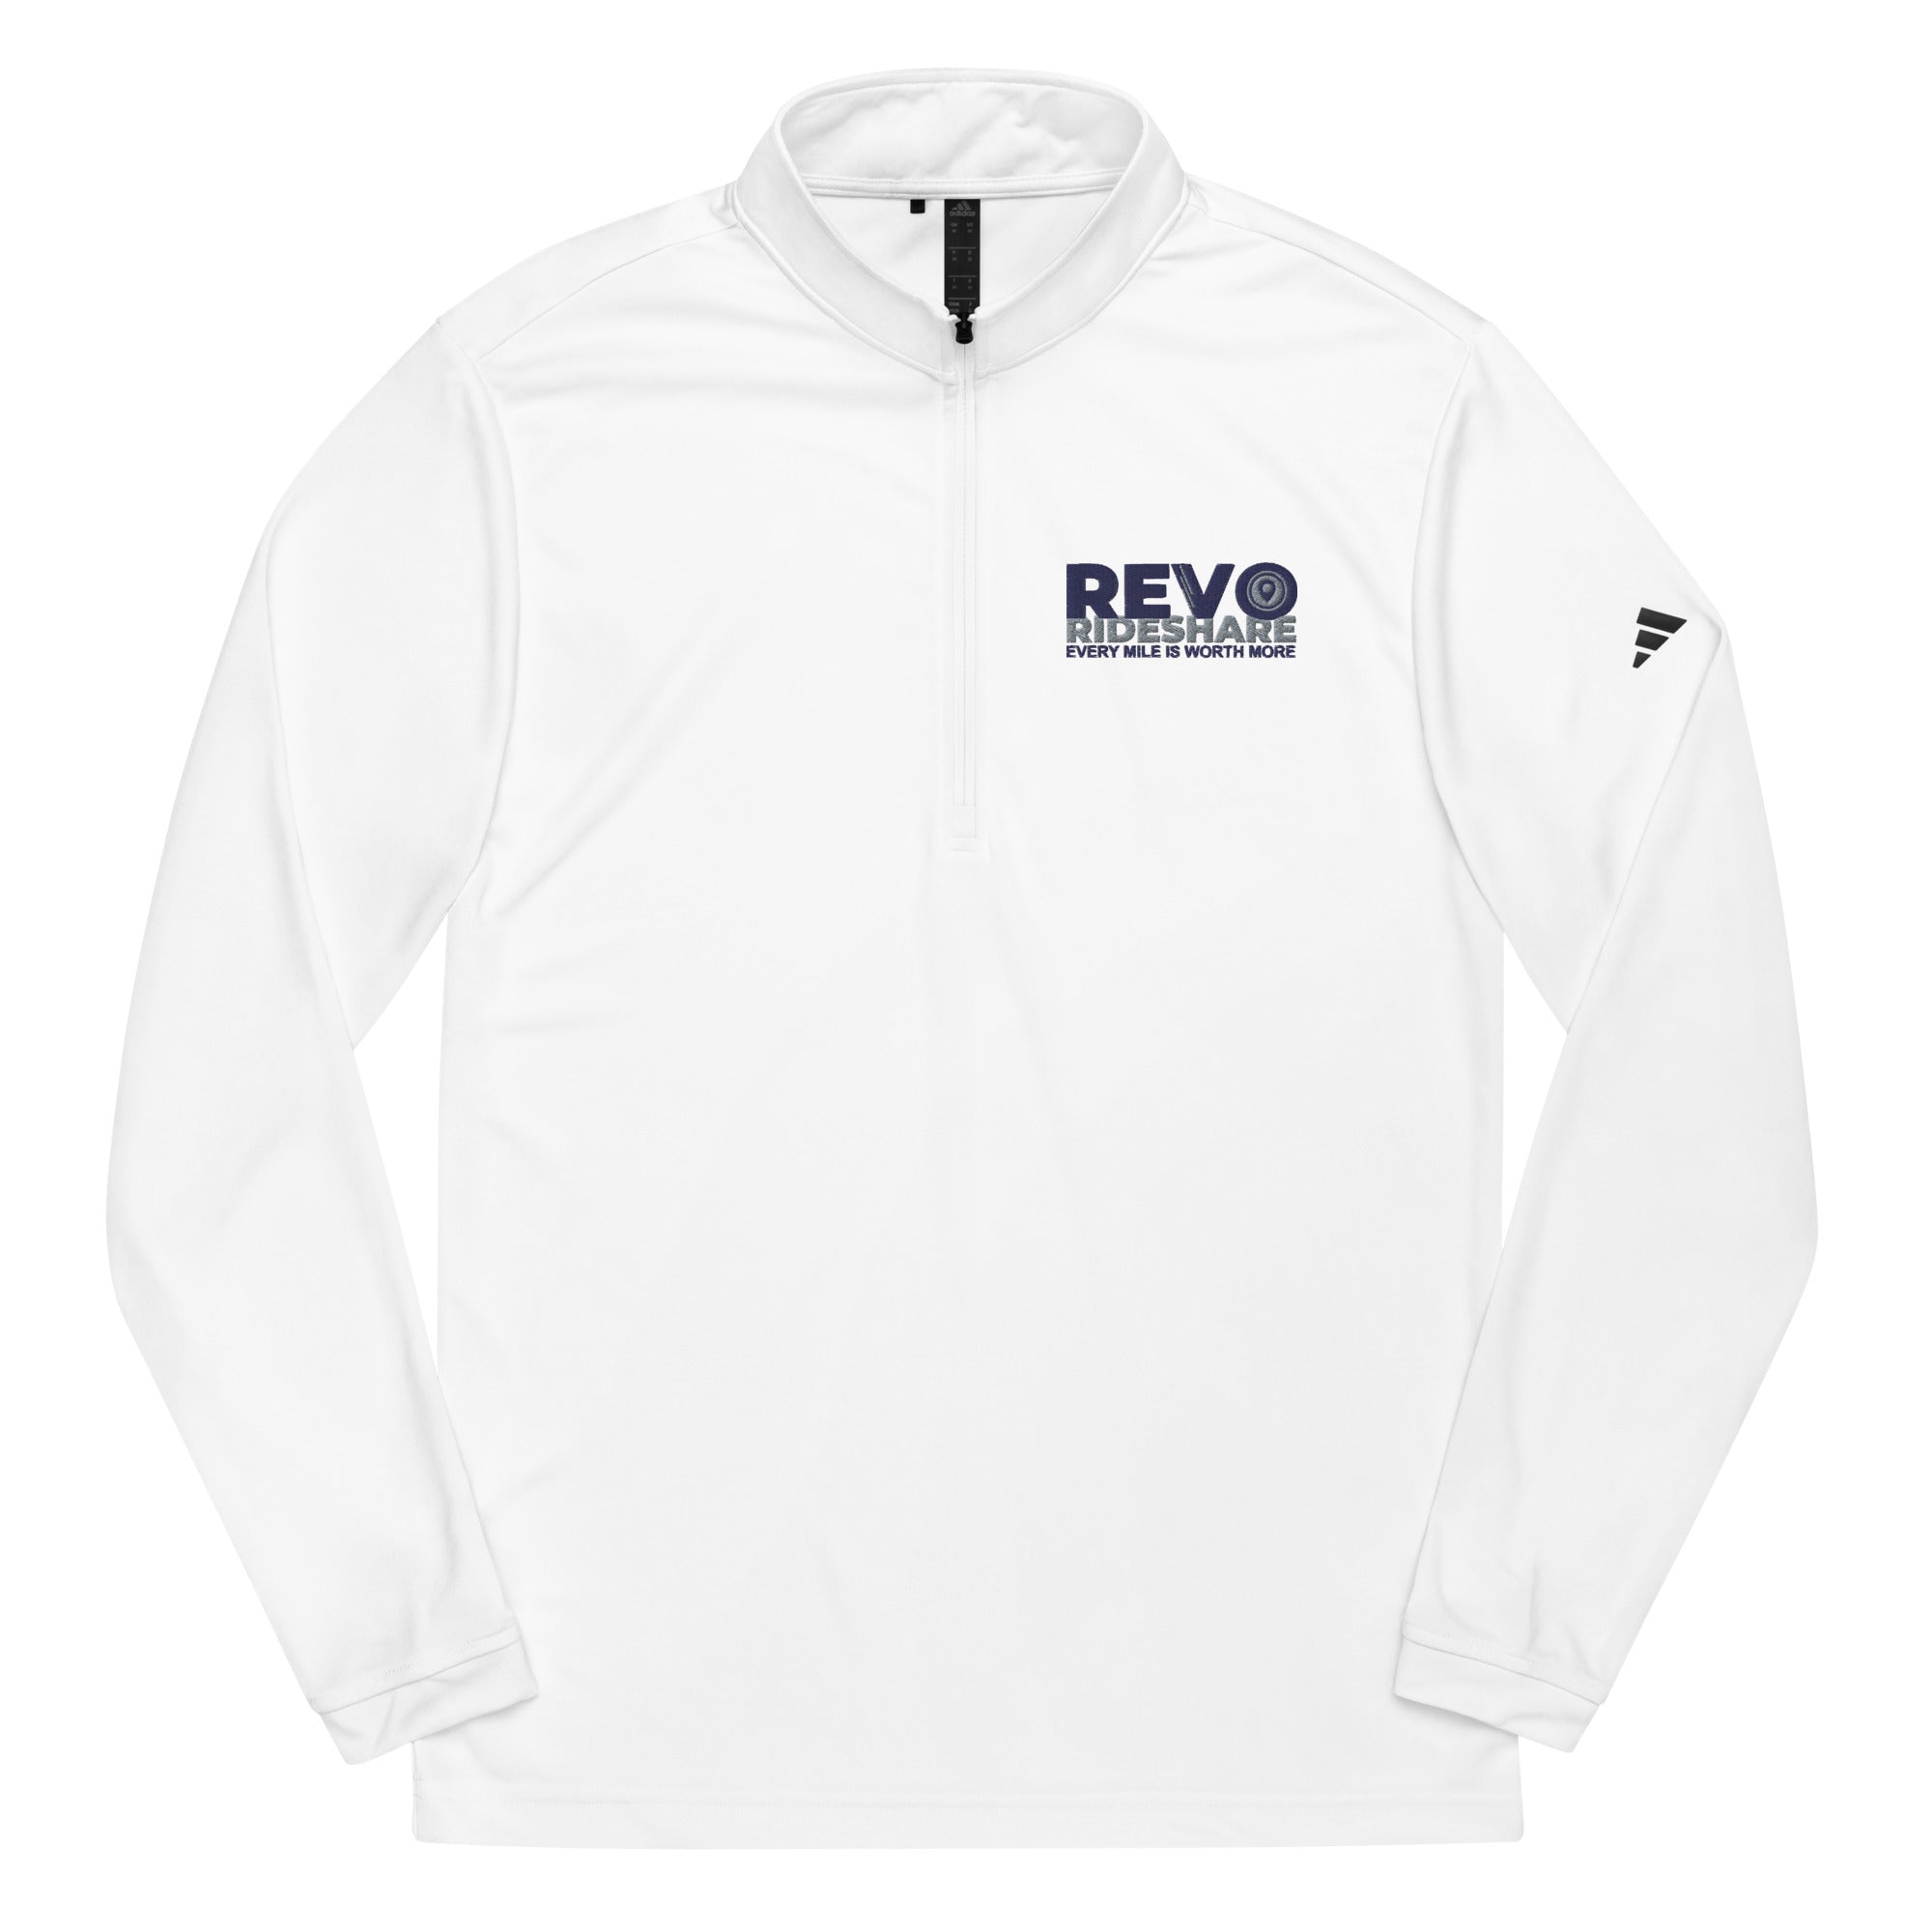 REVO Rideshare Quarter zip pullover